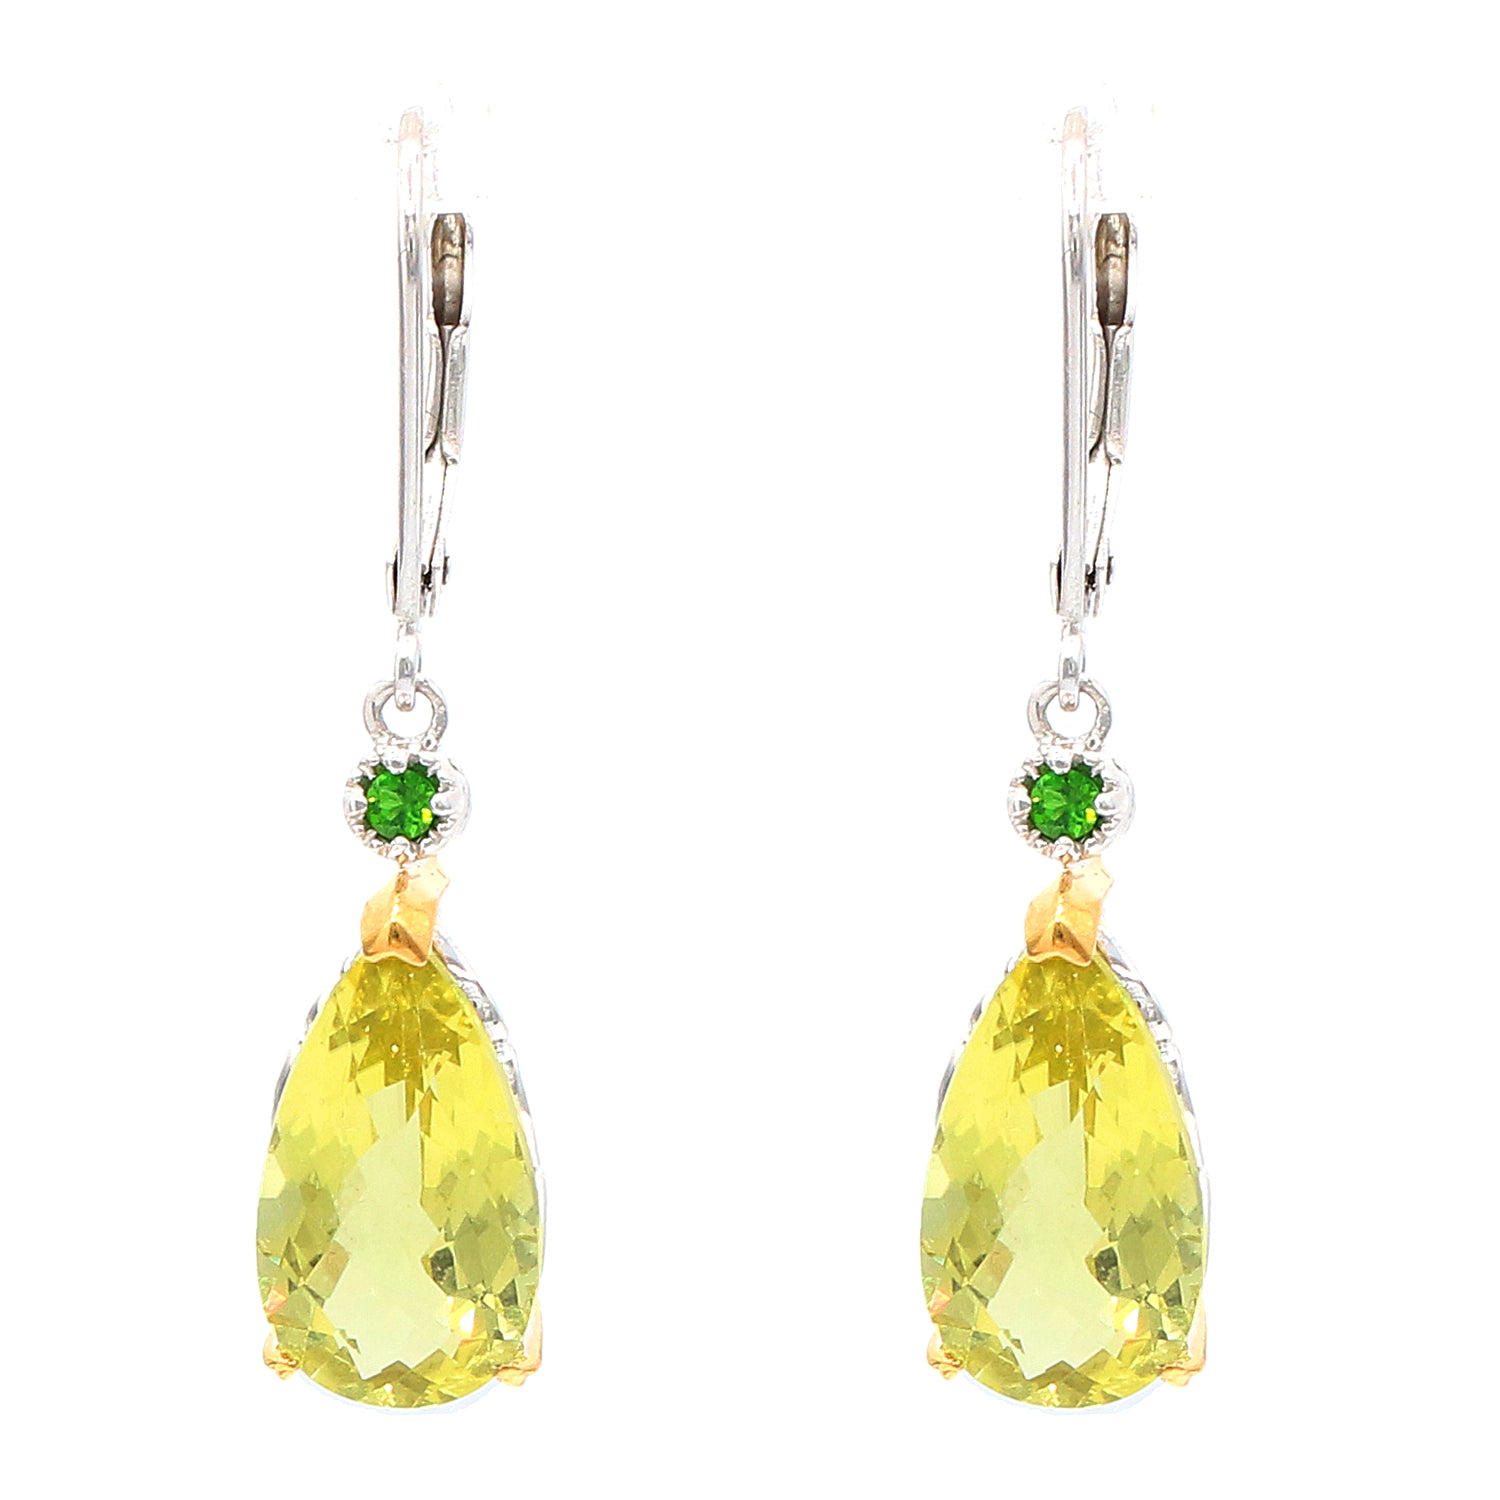 Gems en Vogue 6.08ctw Ouro Verde & Chrome Diopside Drop Earrings